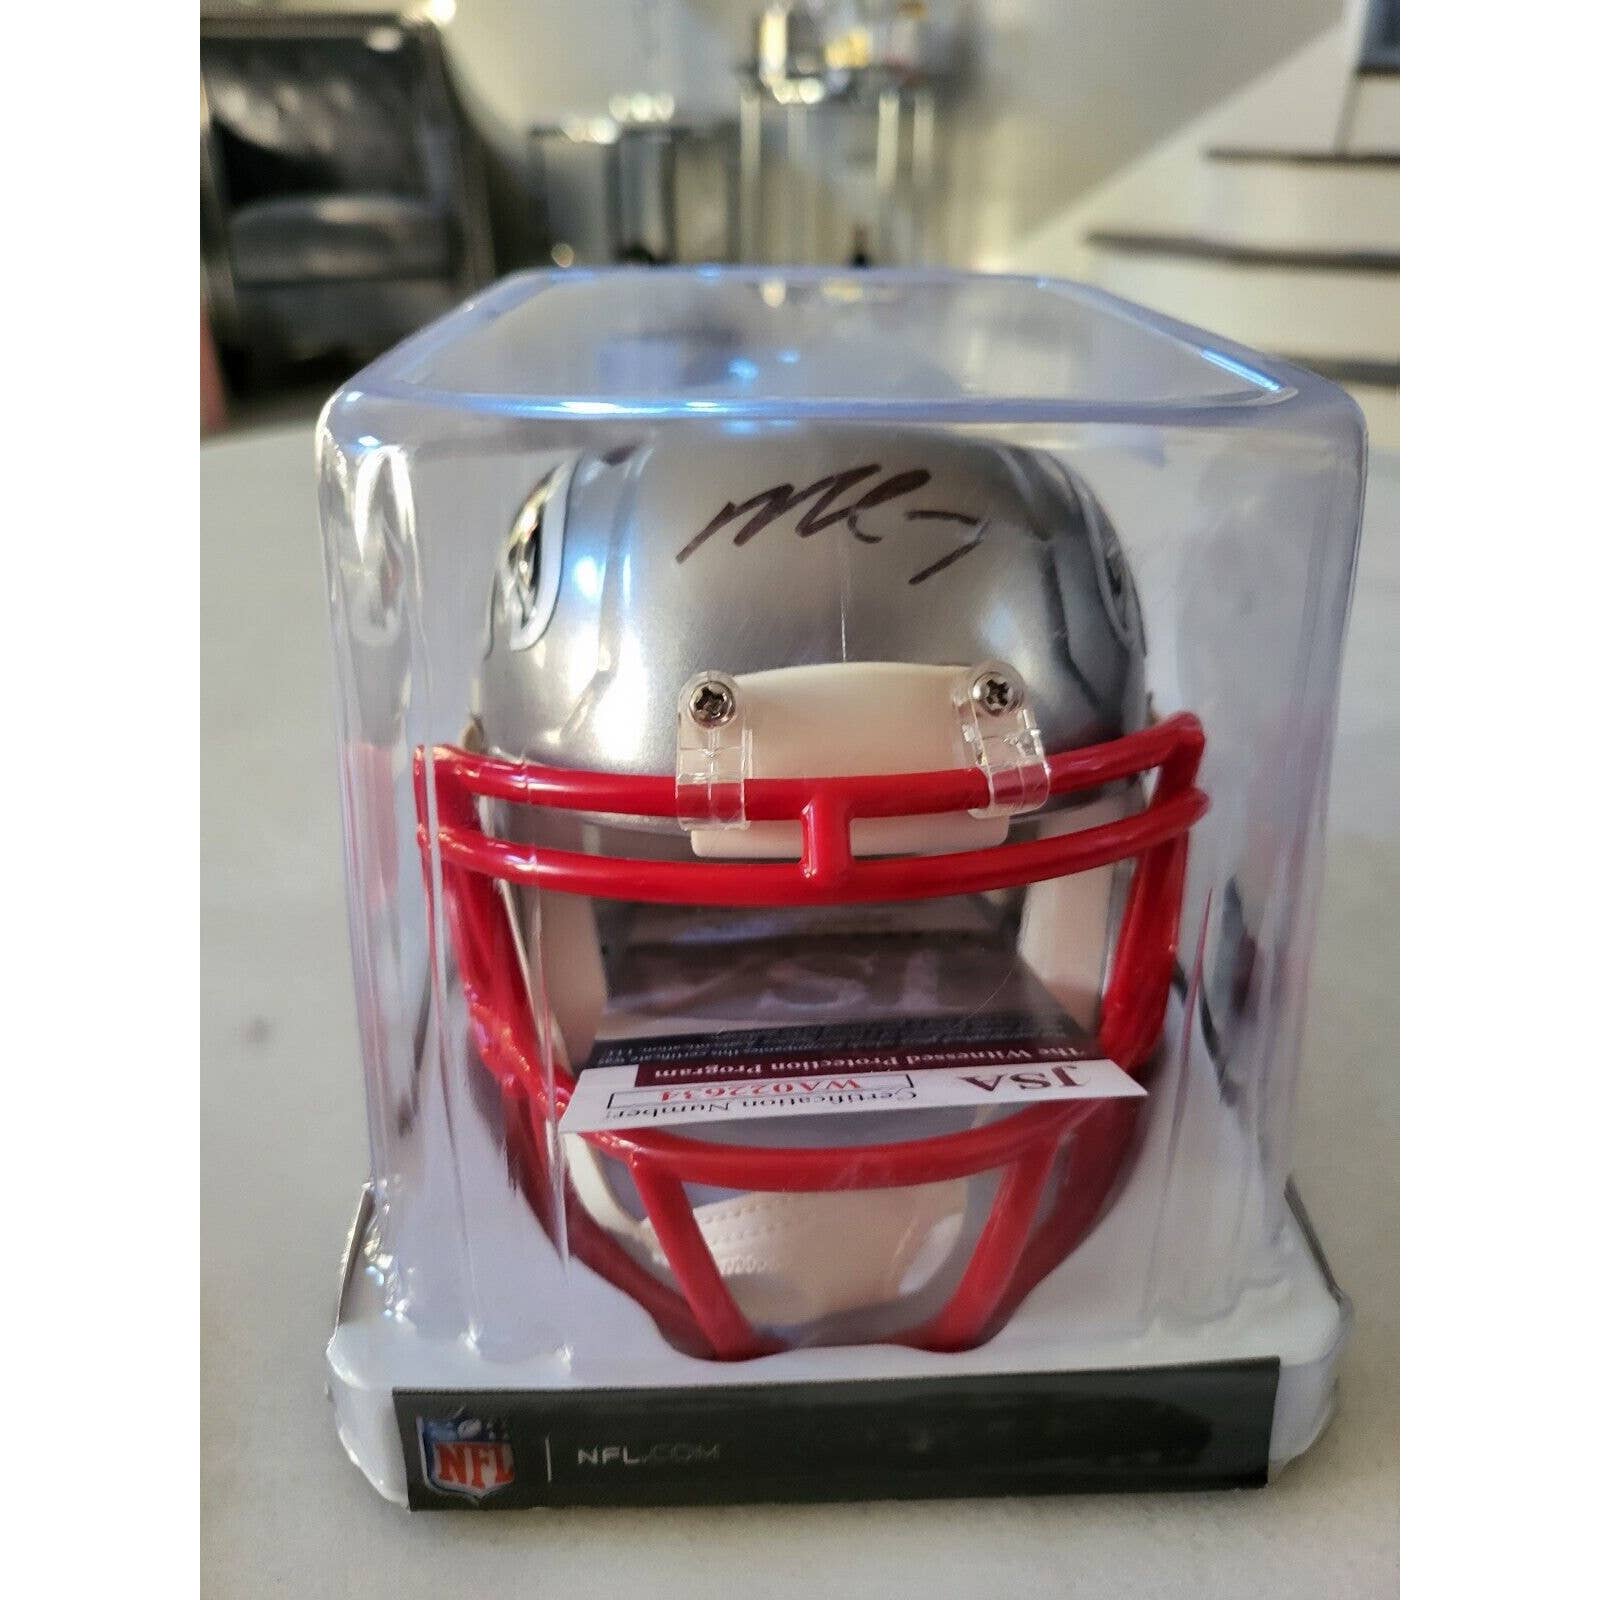 Michael Vick Autographed/Signed Mini Helmet JSA COA Atlanta Falcons Flash - TreasuresEvolved